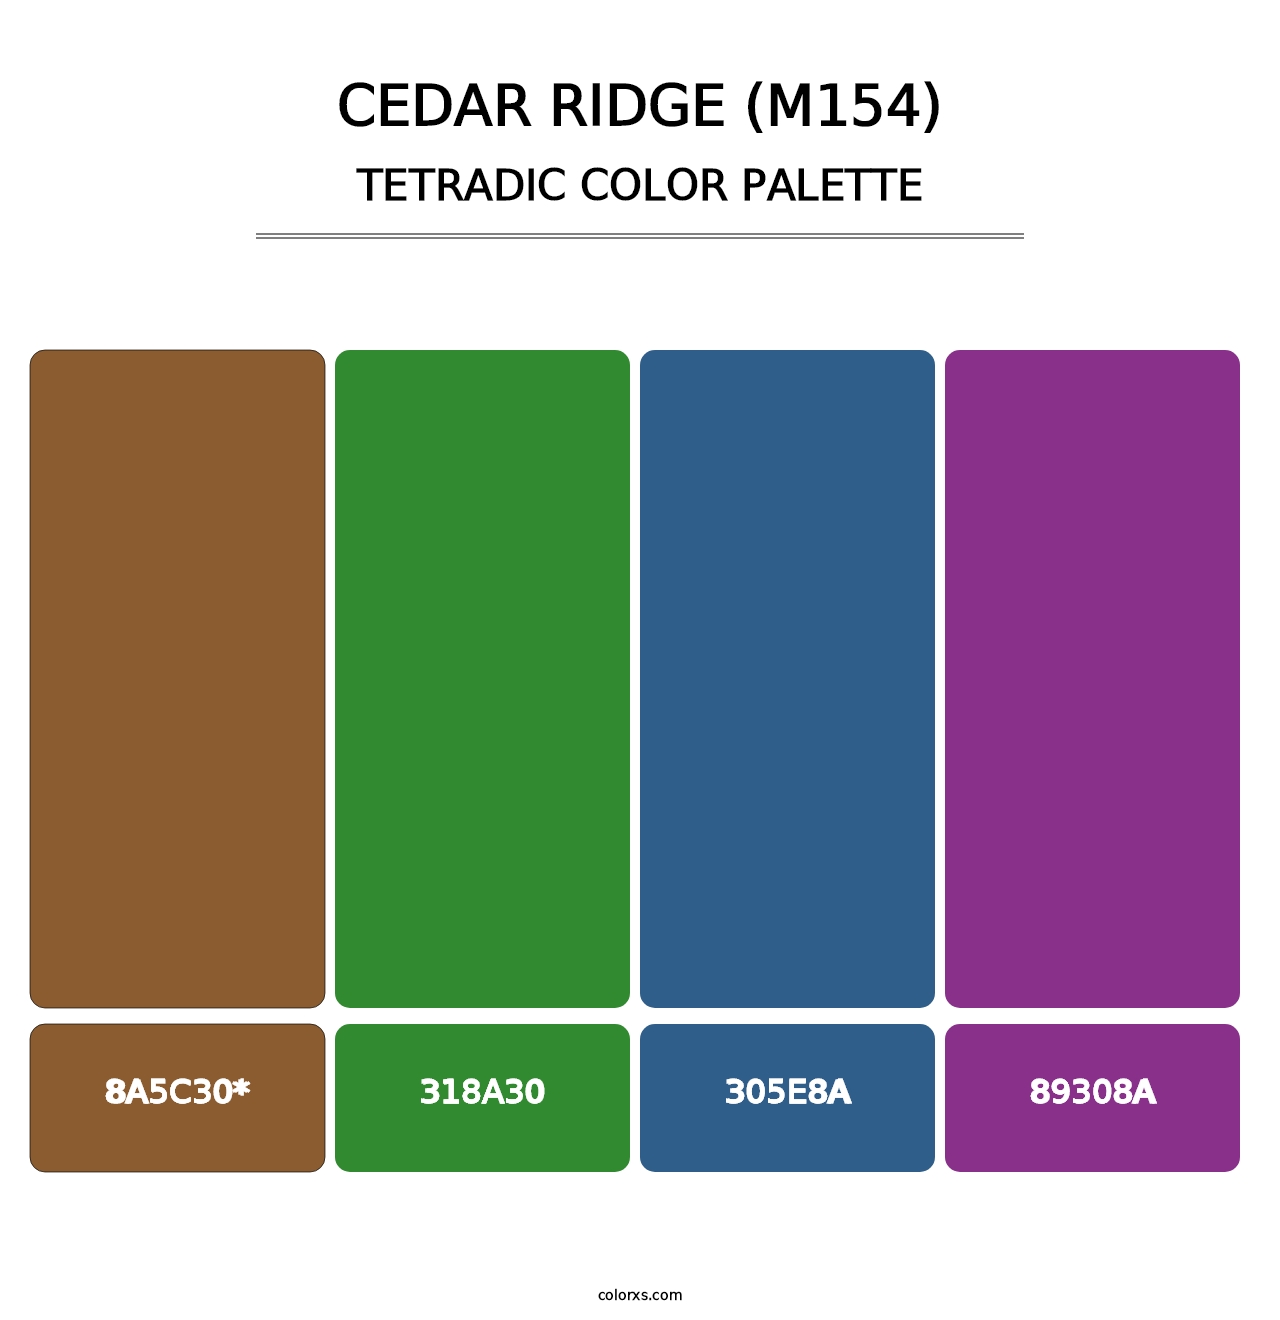 Cedar Ridge (M154) - Tetradic Color Palette